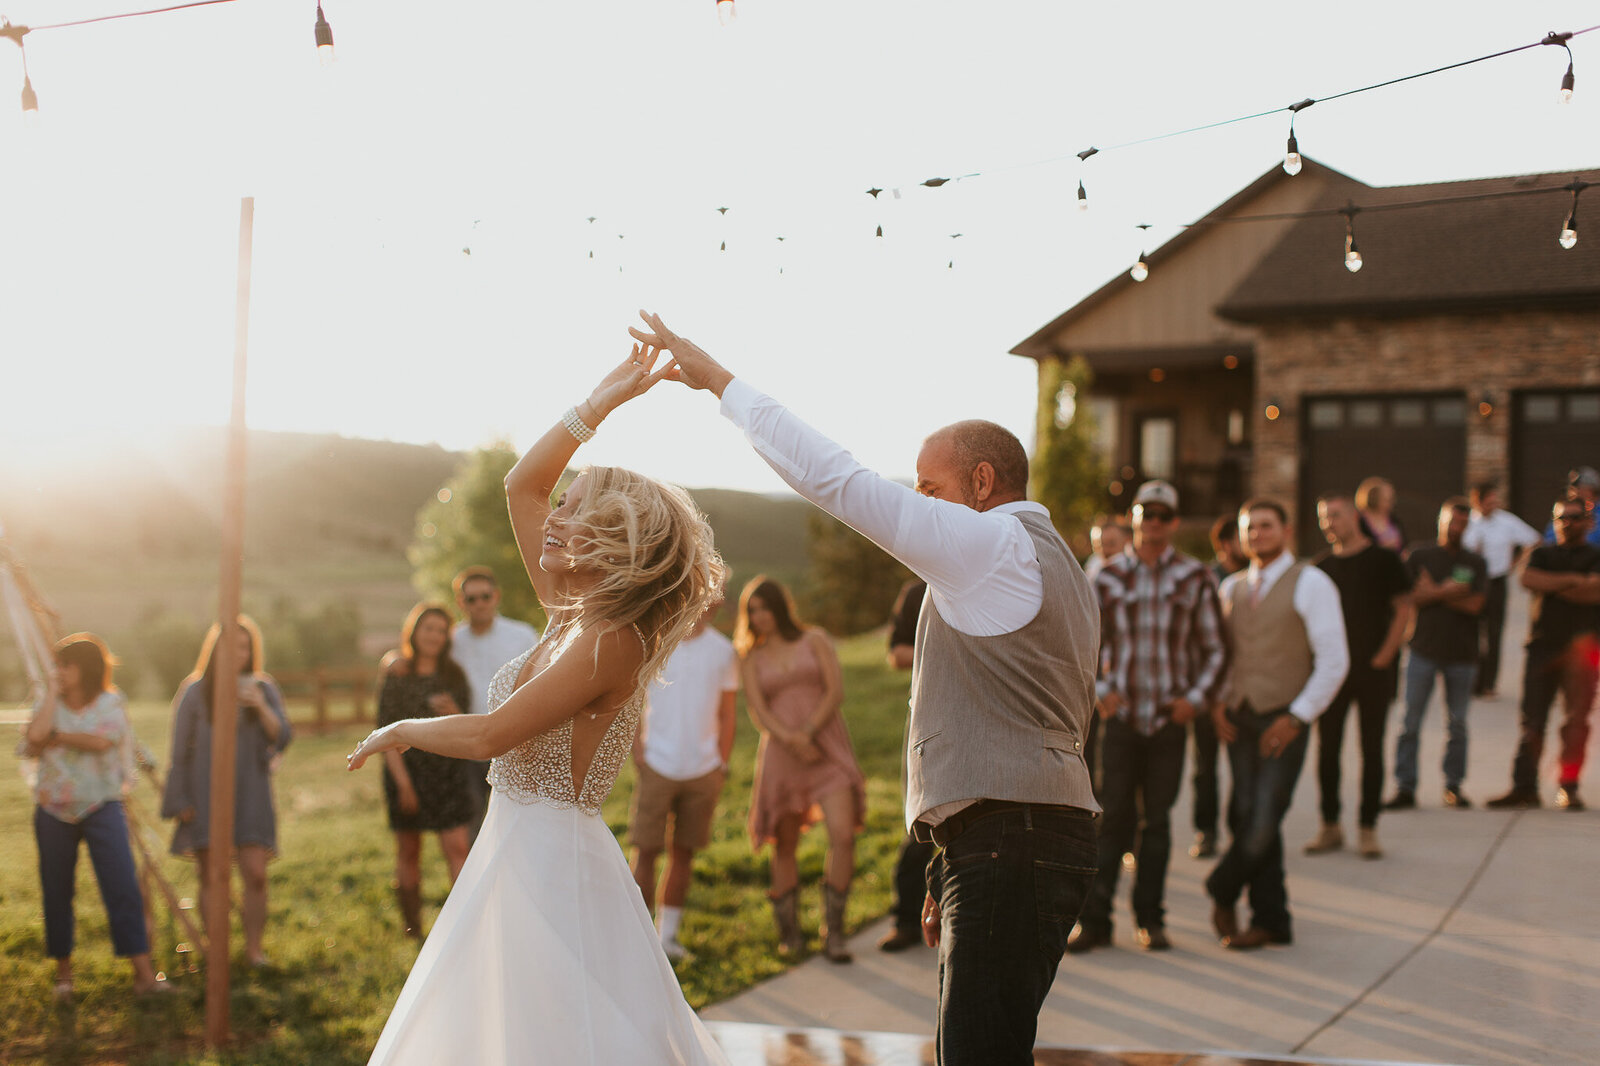 groom twirling bride on the dance floor at sunset